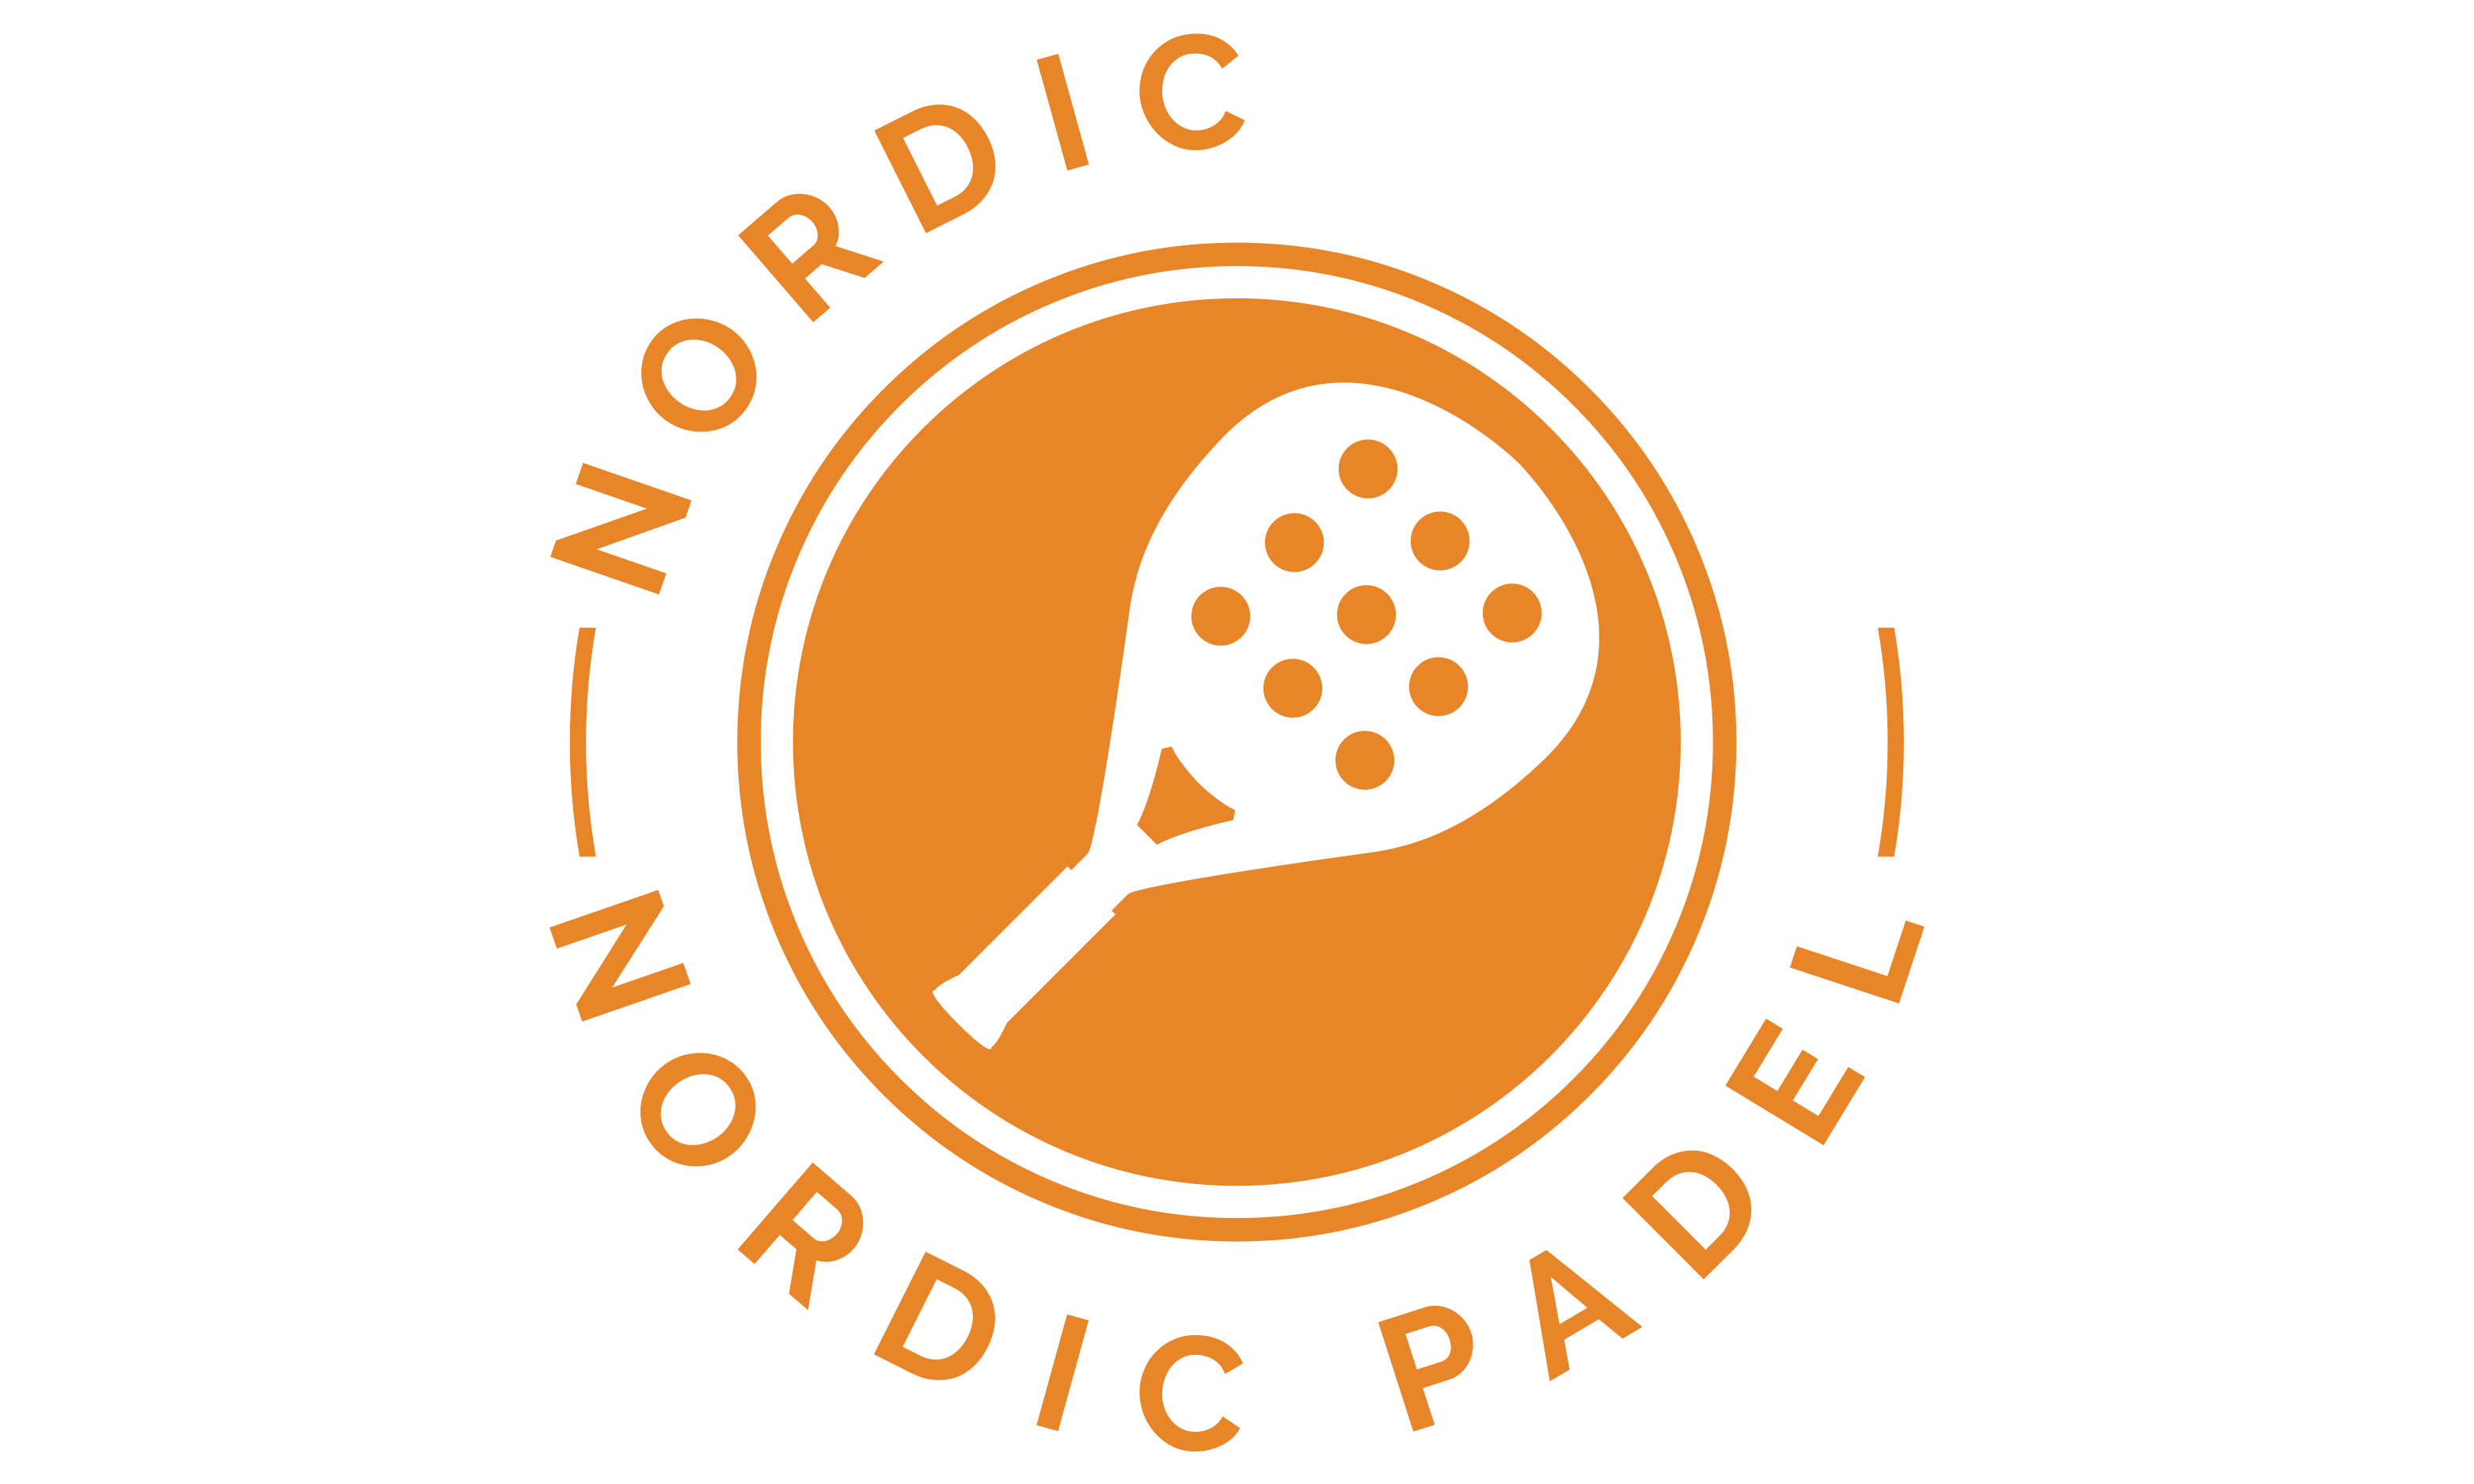 Nordic Padel Australia